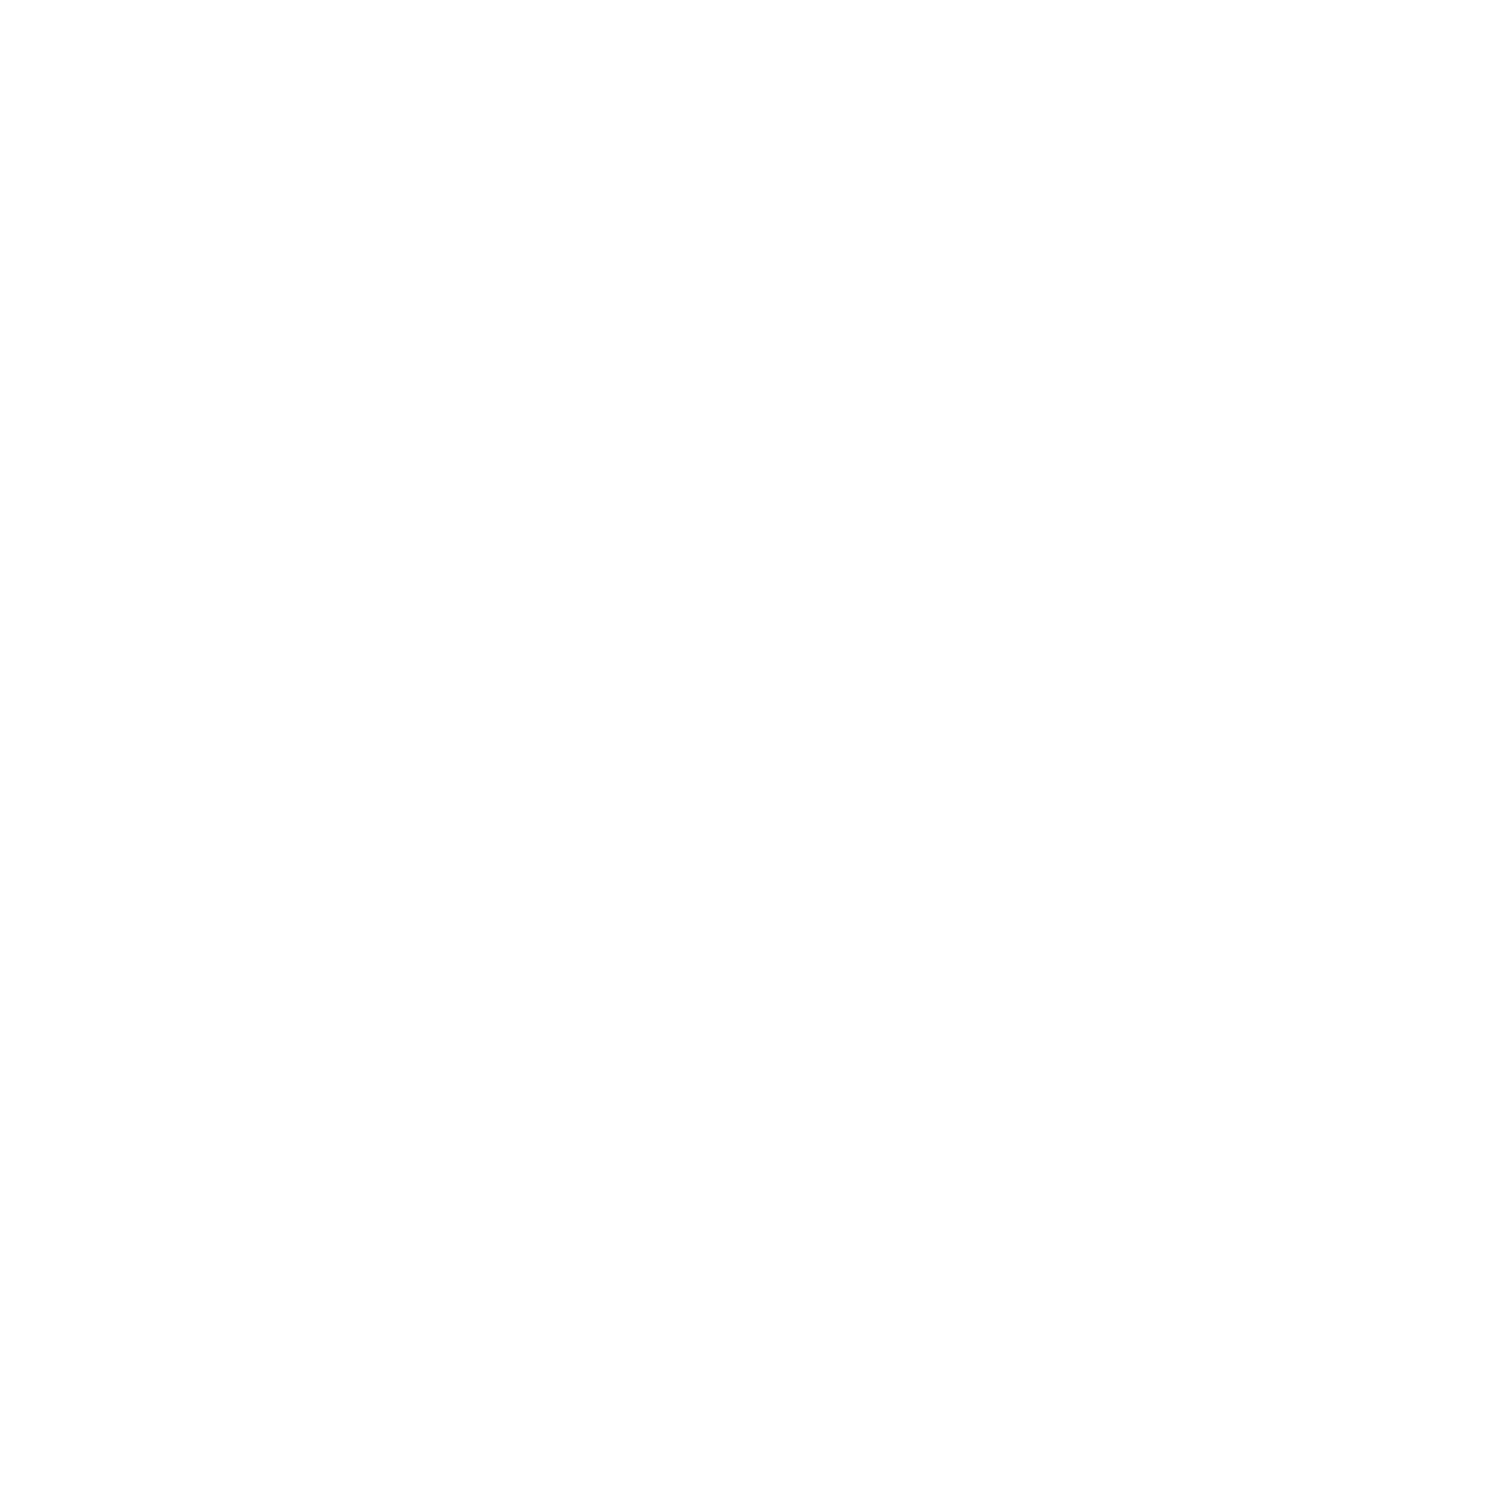 Theatre 202